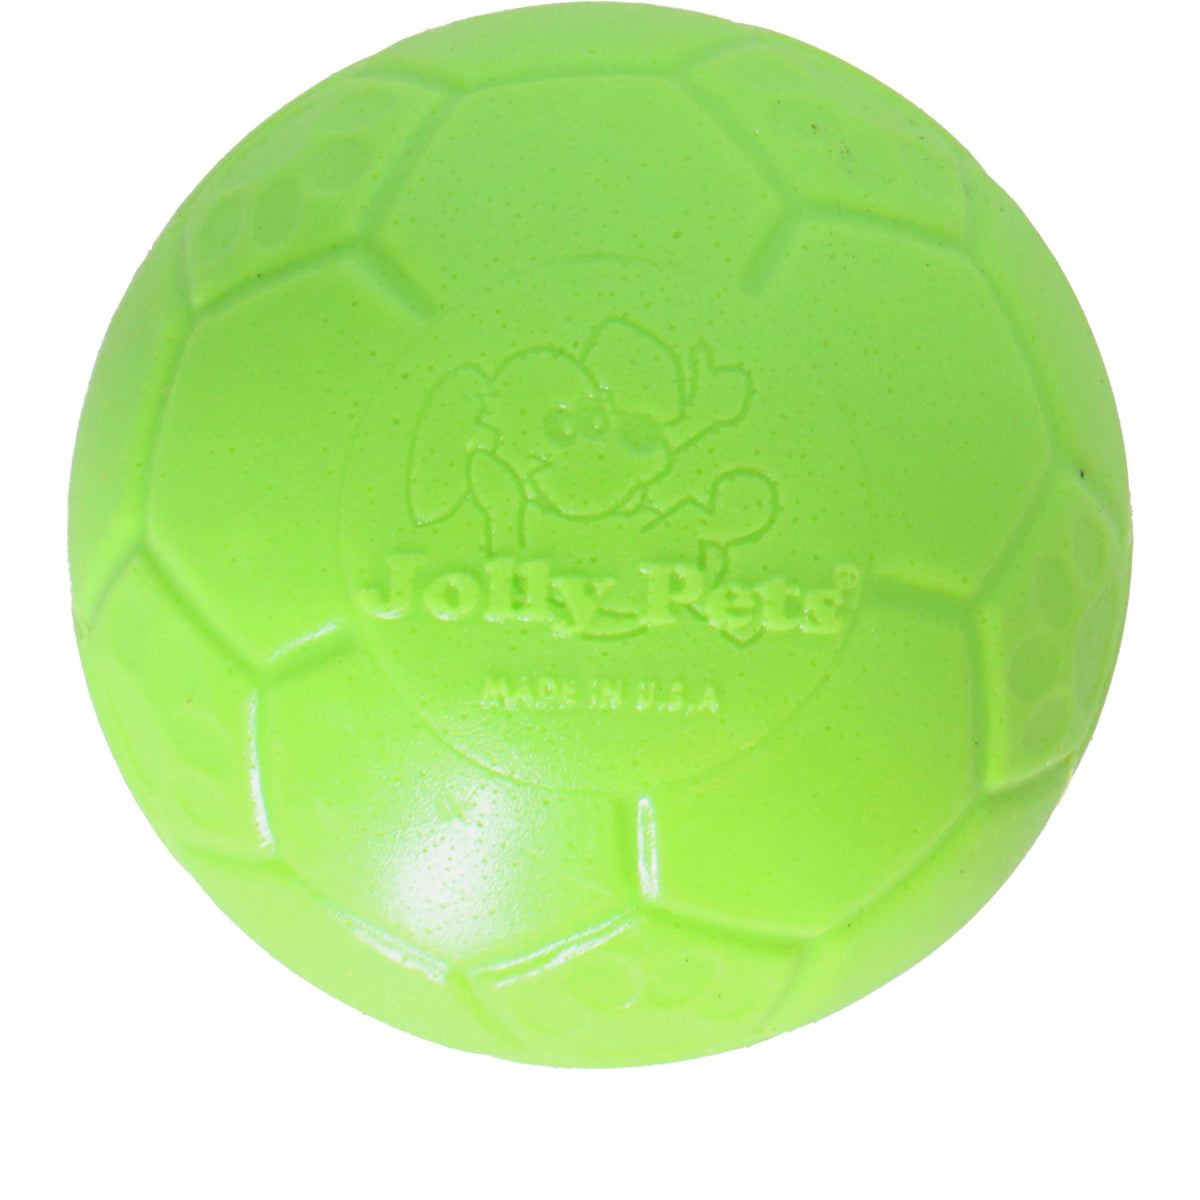 Jolly Ball Soccer Ball Apfel Grün